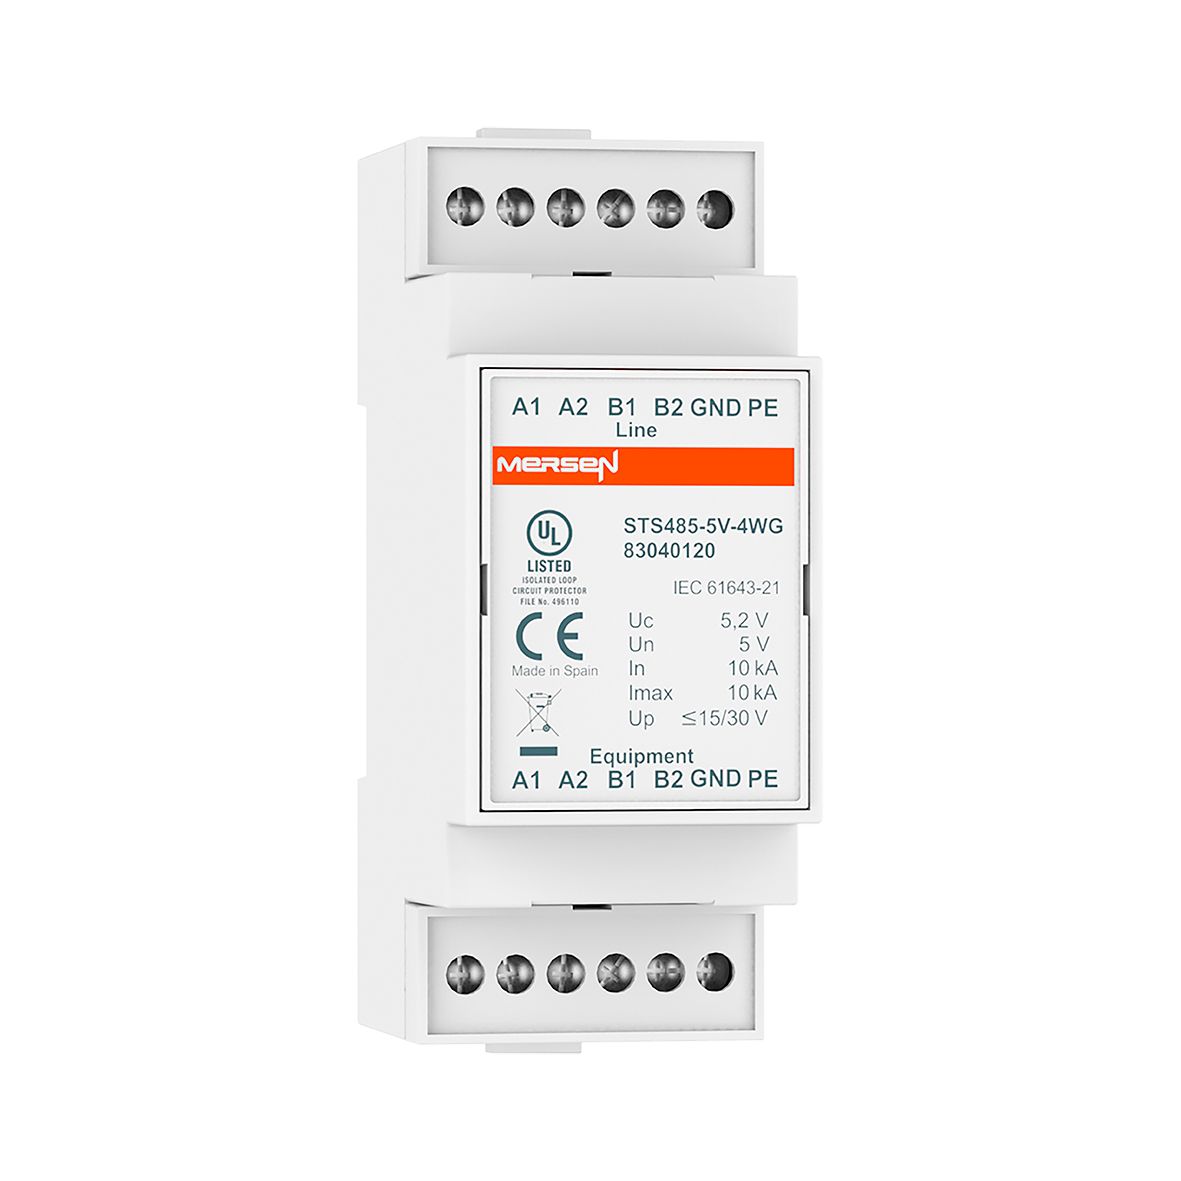 83040120 - SPD for analog signals DIN rail format, 4 protected wires, 5 V, 10 kA.